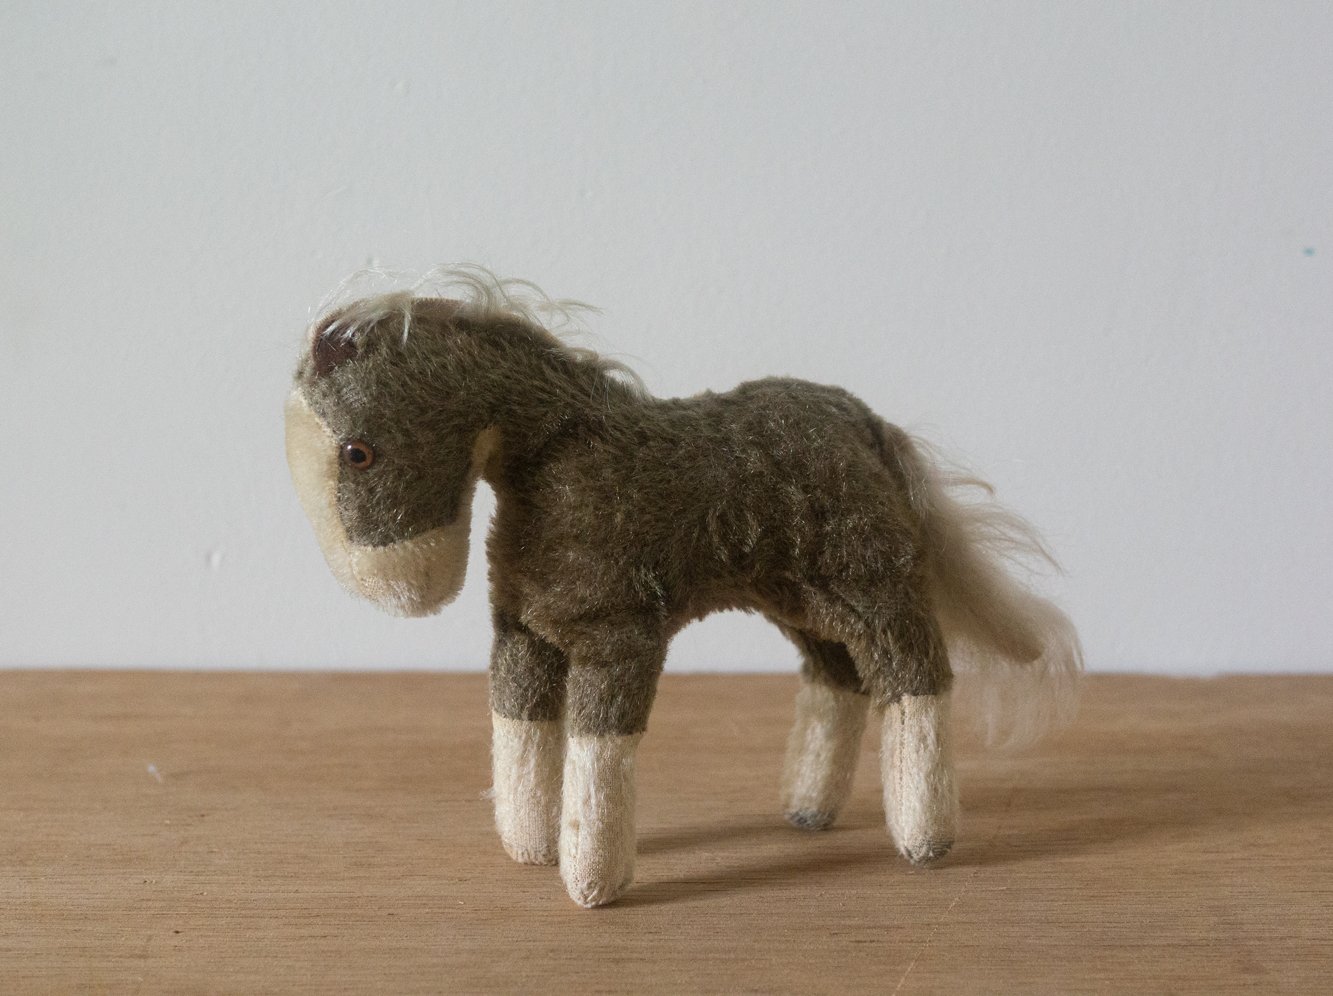 Image of little pony